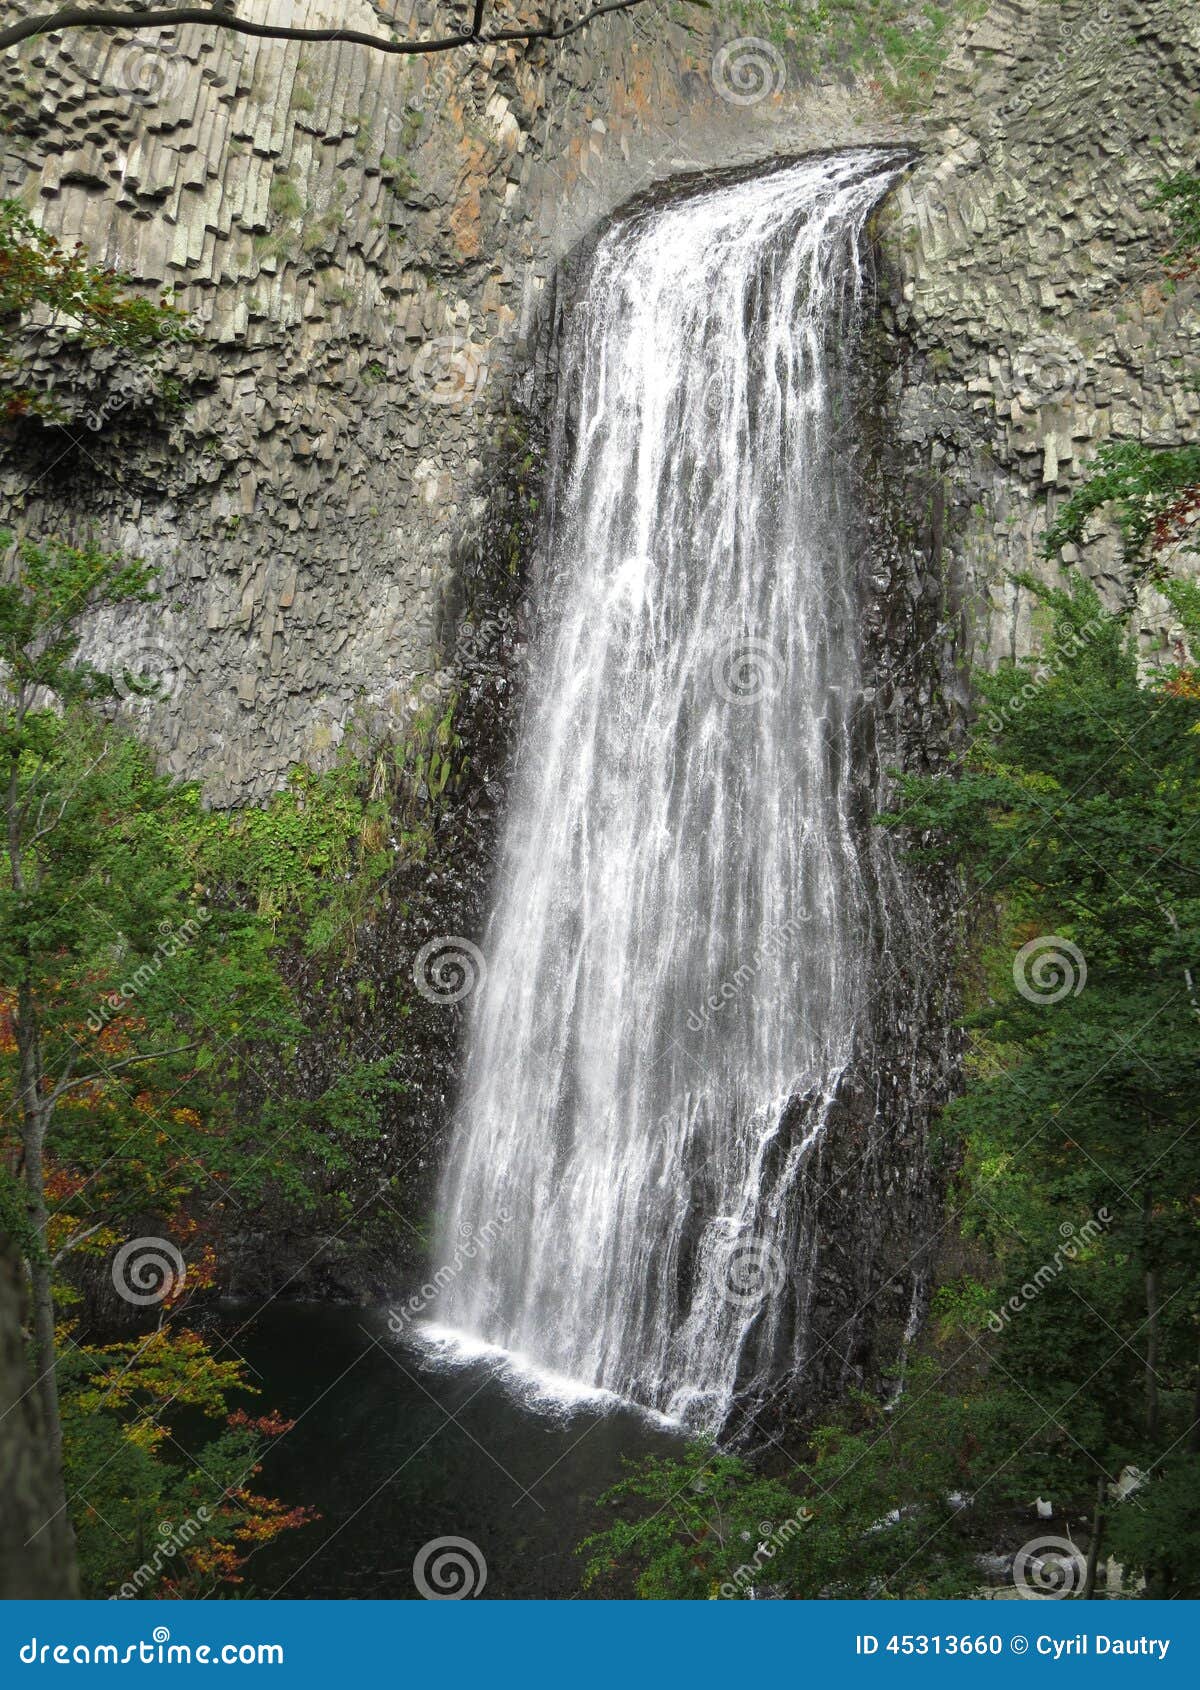 cascade du ray pic (ardeche) - waterfall